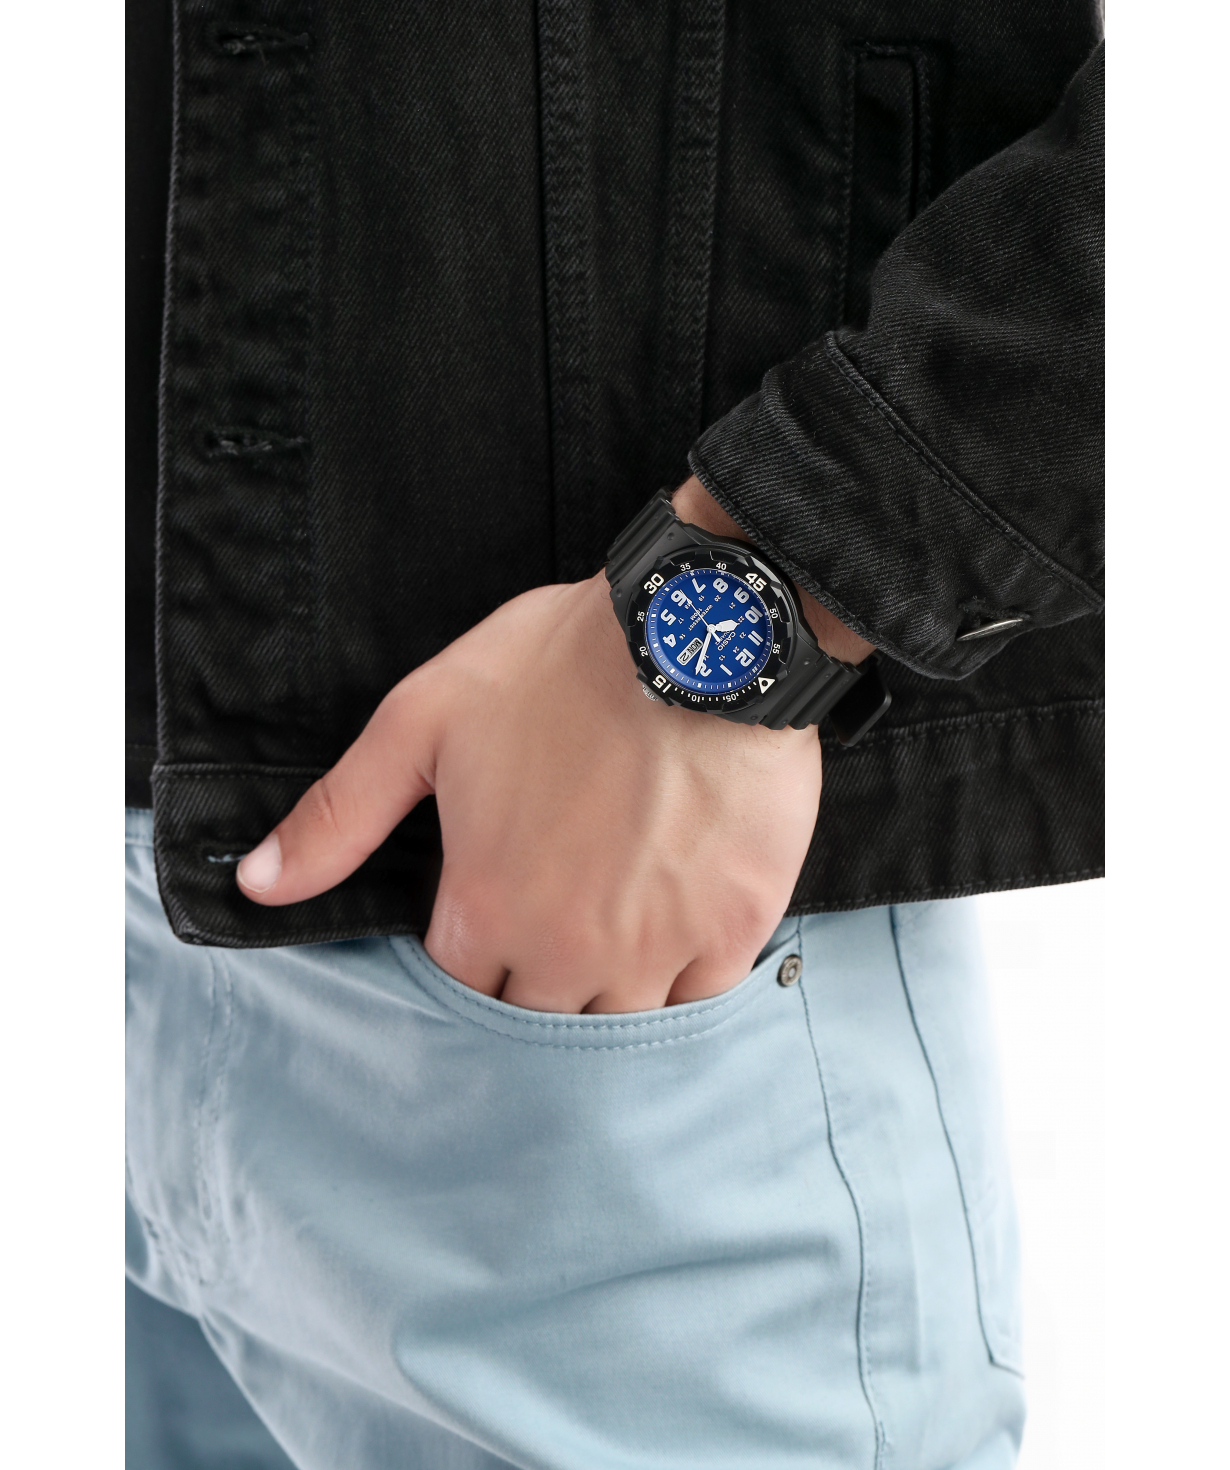 Ժամացույց  «Casio» ձեռքի   MRW-200H-2B2VDF